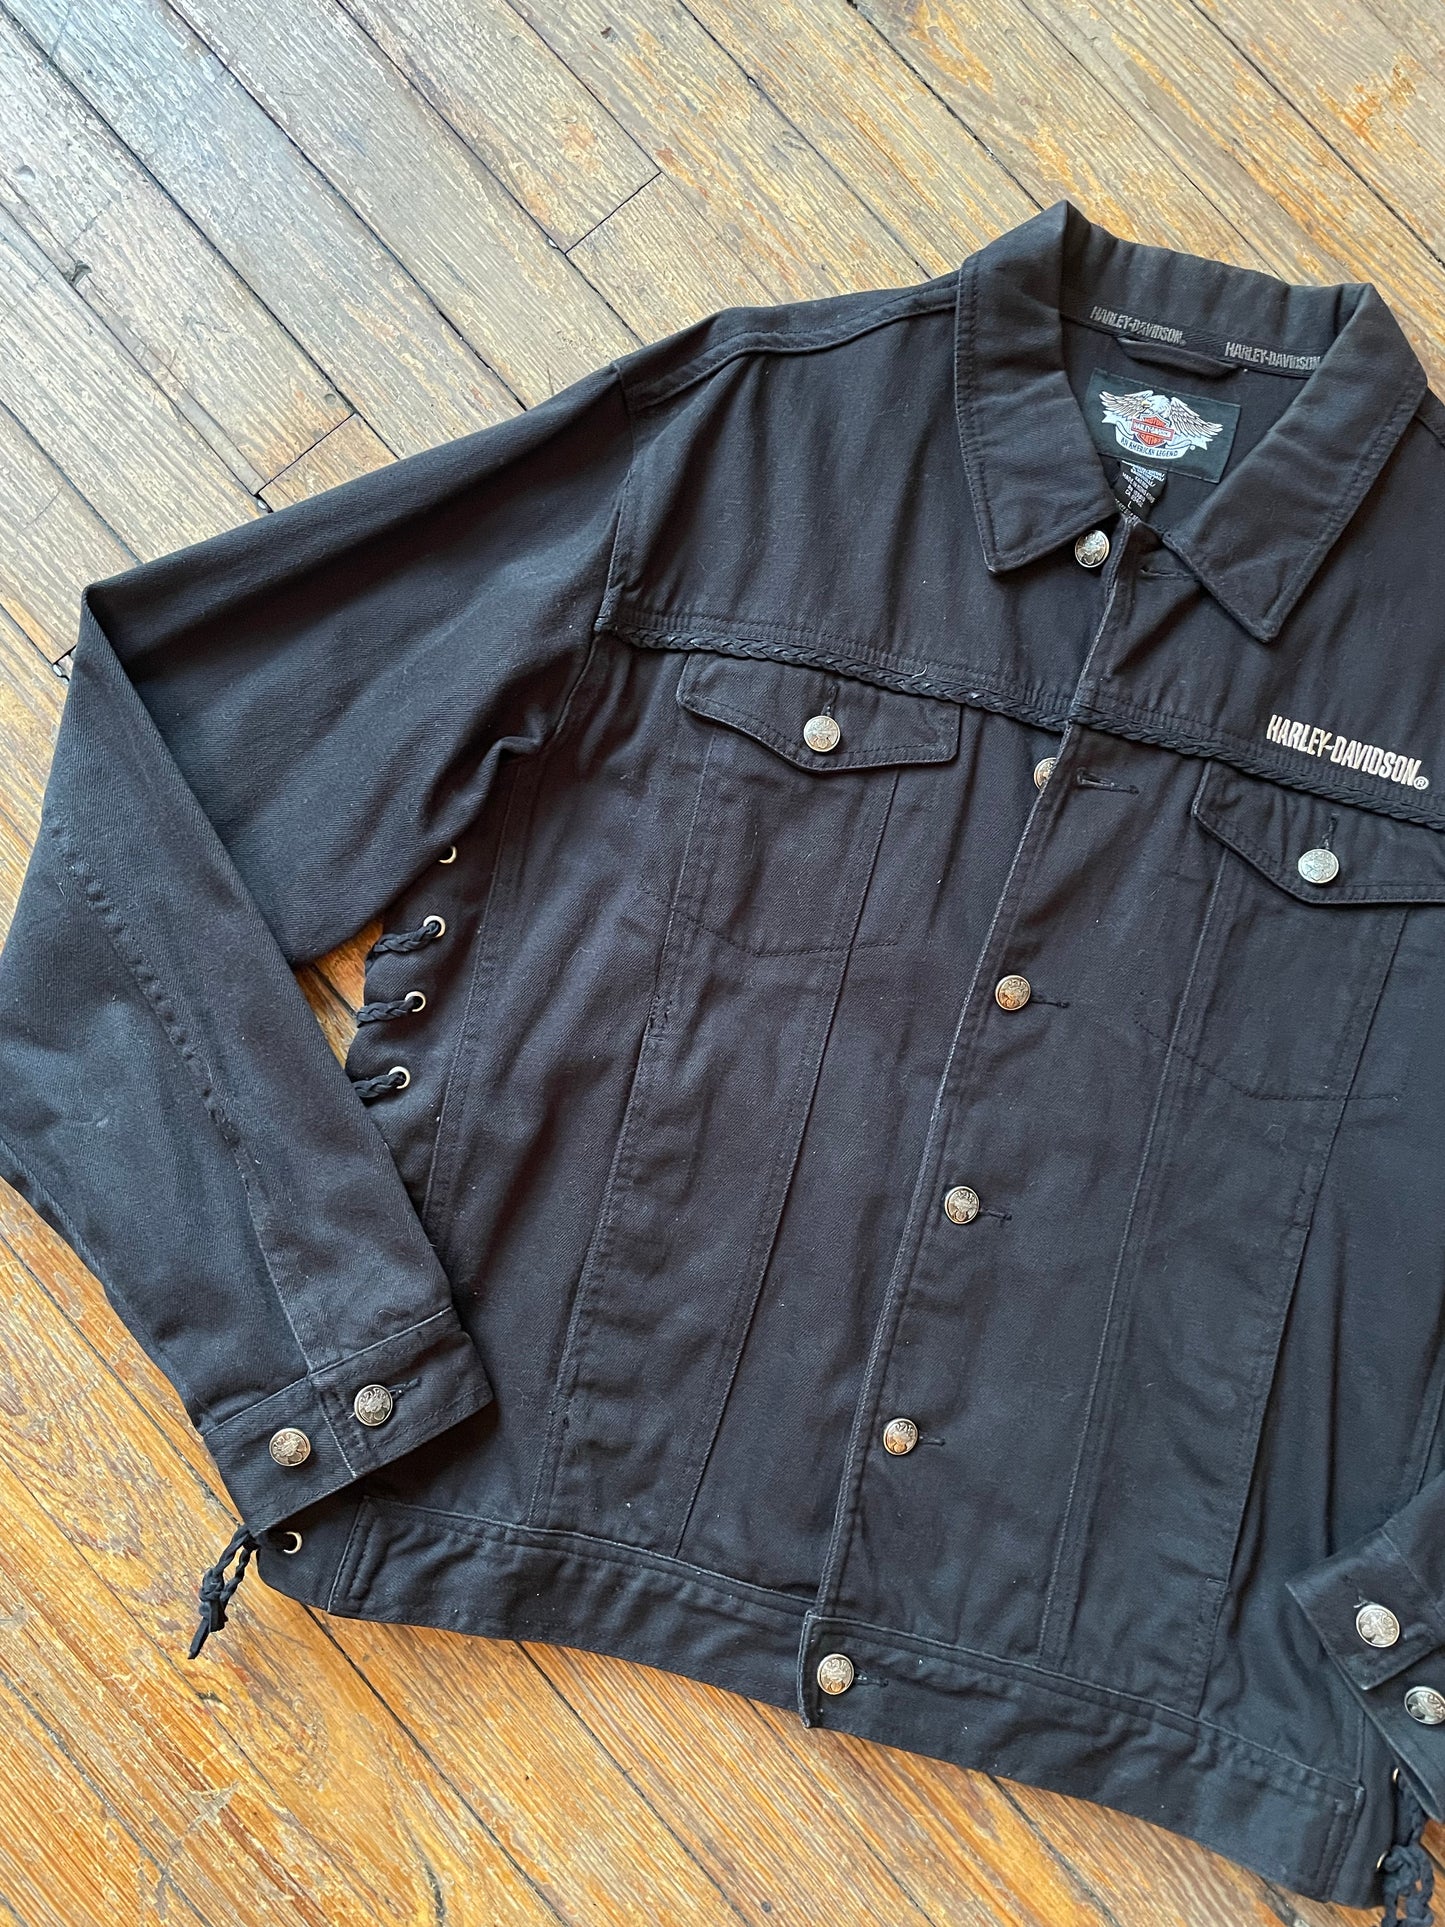 Harley-Davidson Black Denim and Leather Lace-Up Jacket